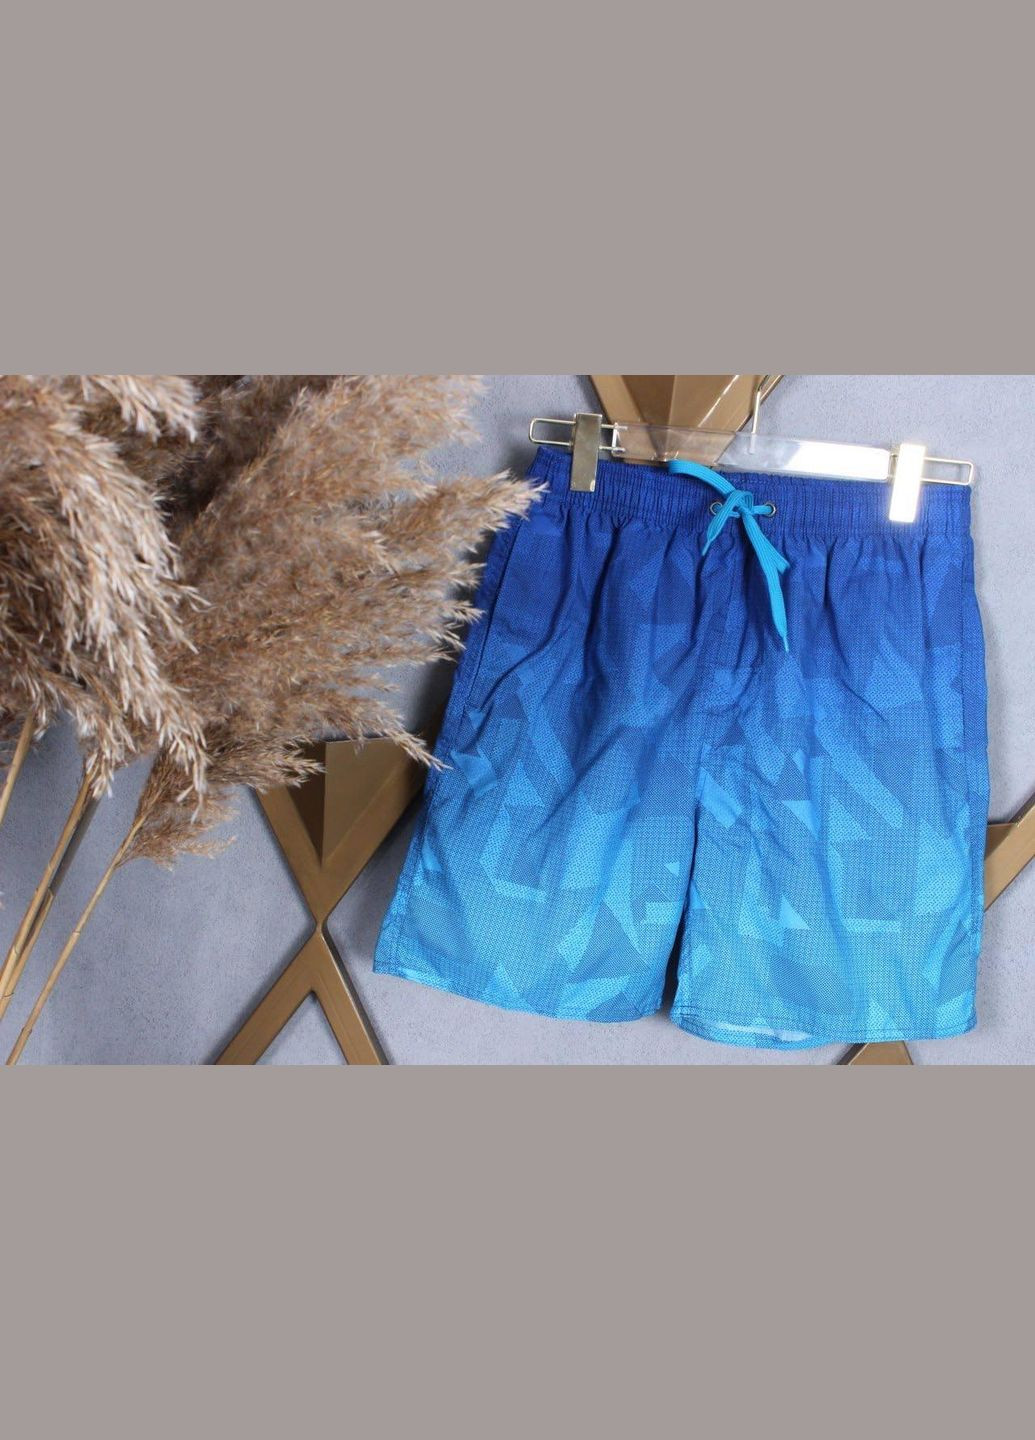 Фабричные шорты-баталы для мужчин JD-2390 Голубой, 4XL(58) Sofia (267495528)